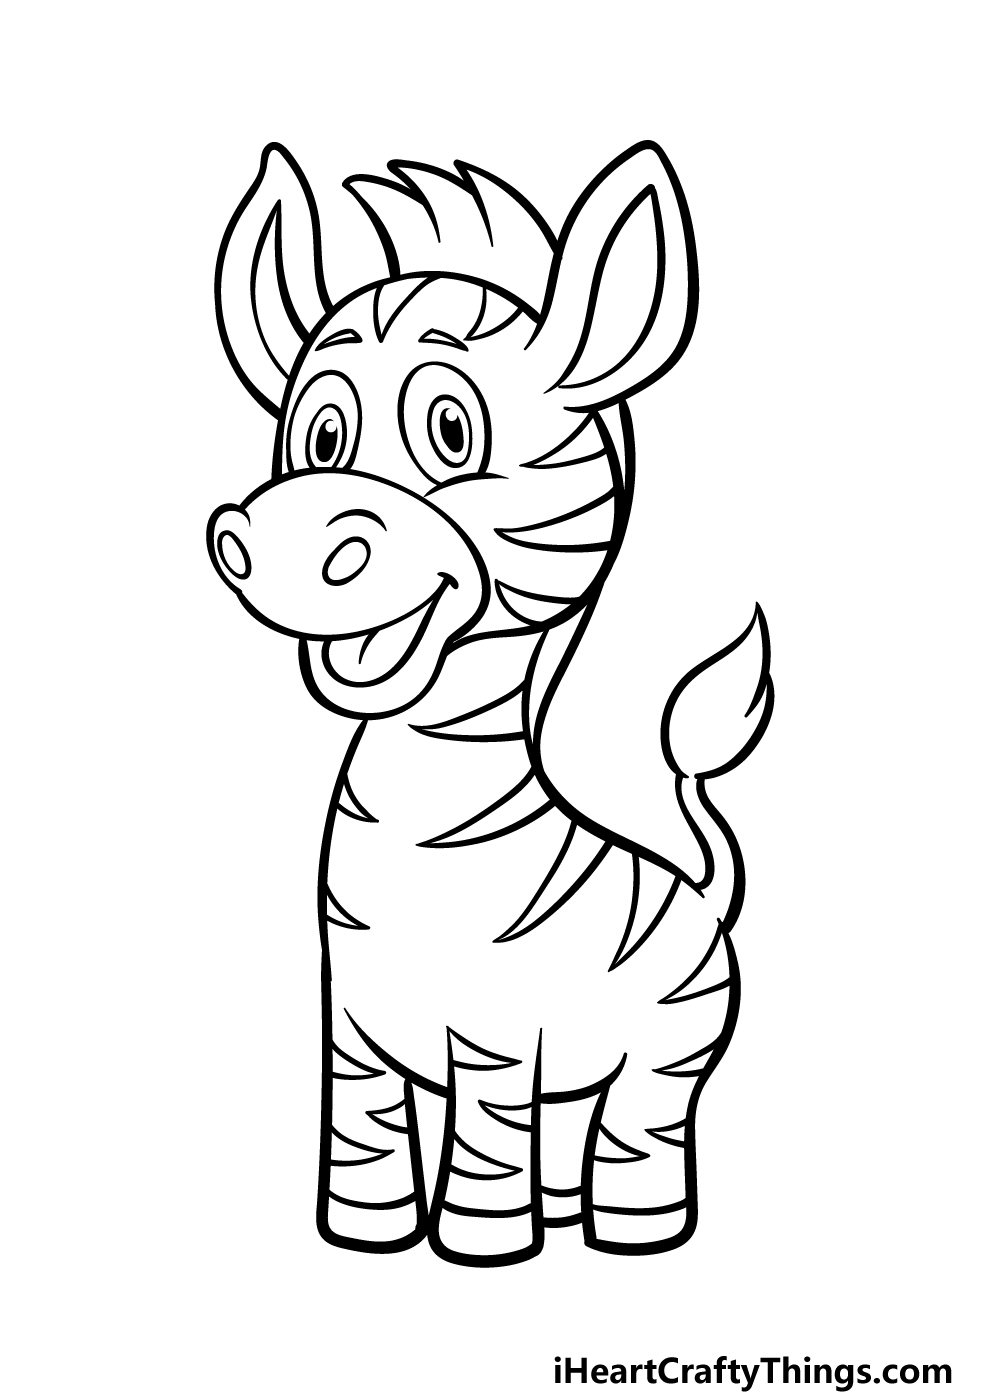 how to draw a cartoon zebra step 7